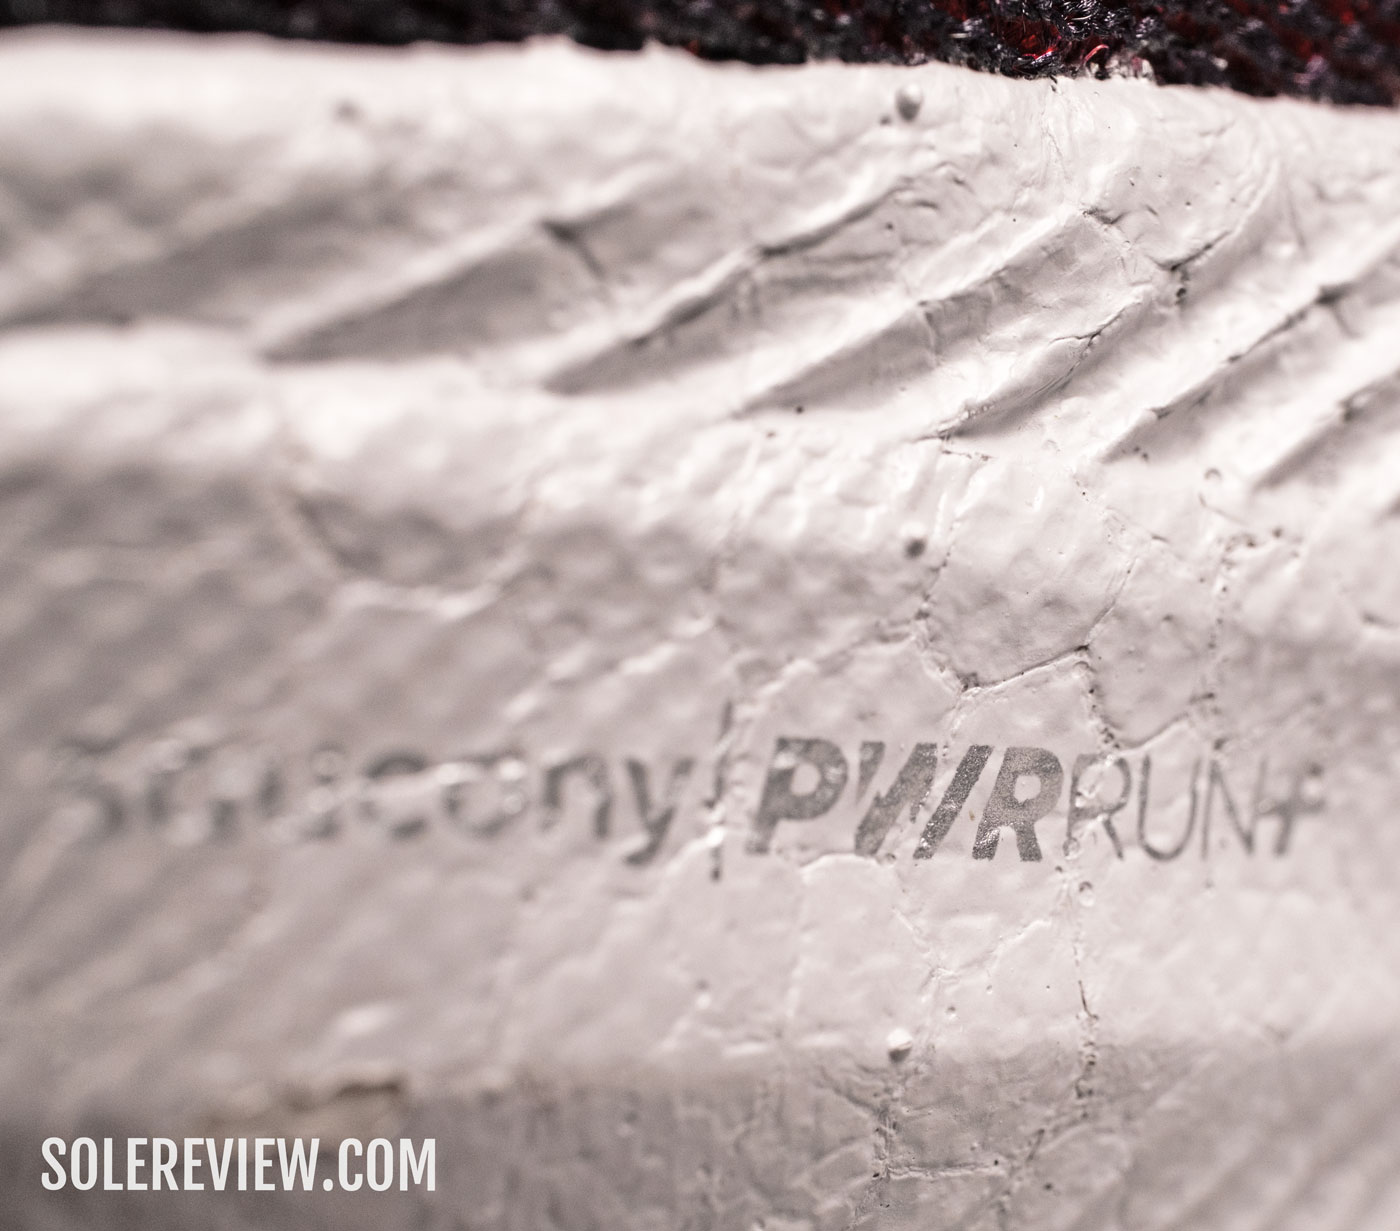 The Pwrrun+ foam of the Saucony Triumph 20.